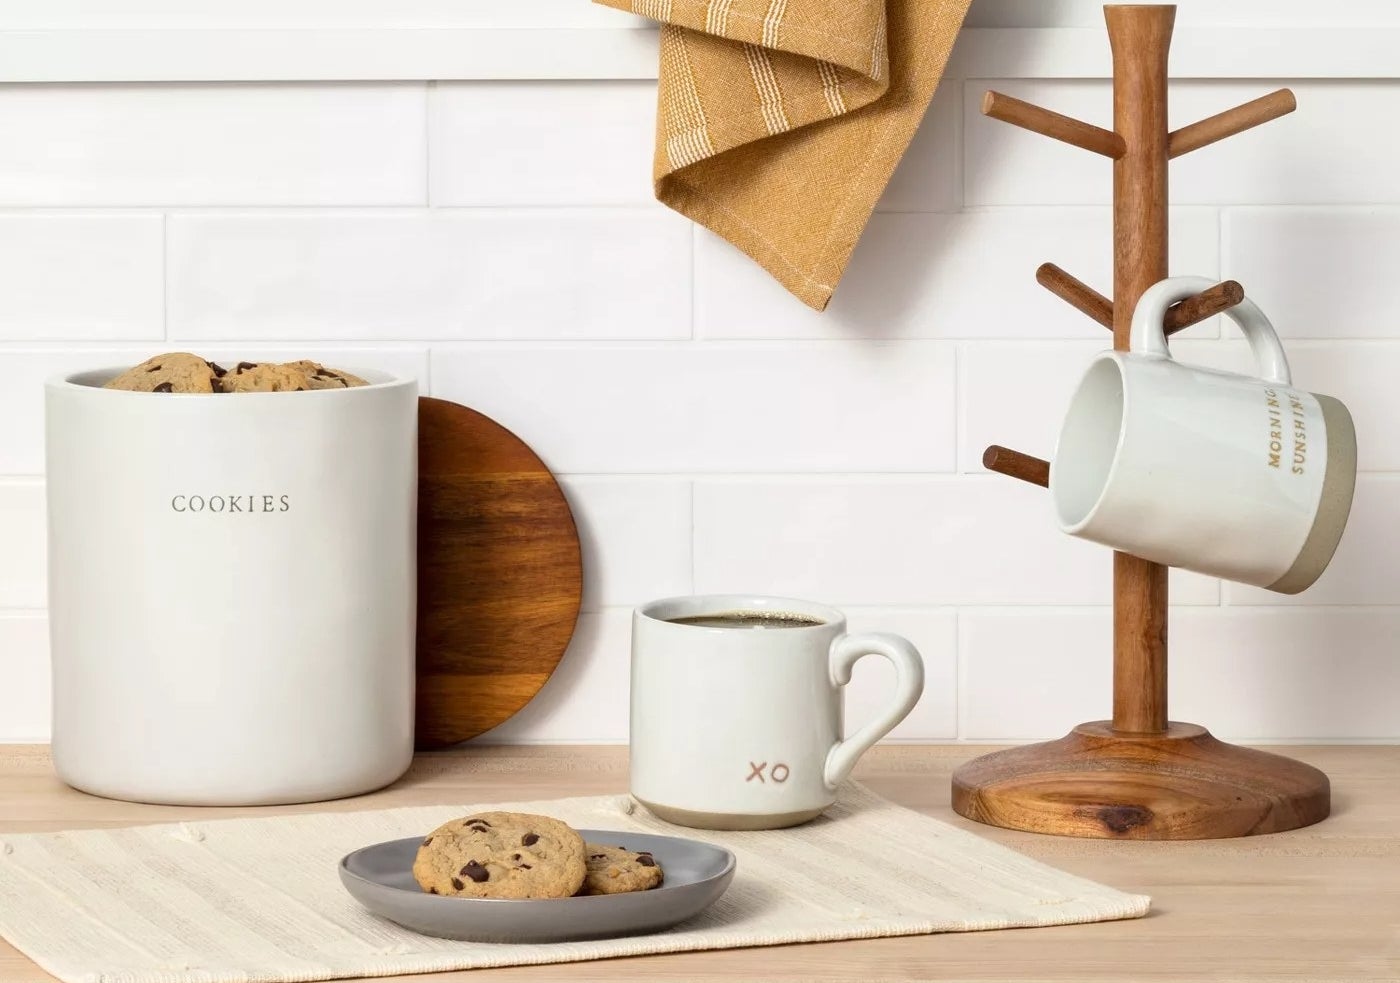 cookie jar next to mug and plate on counter